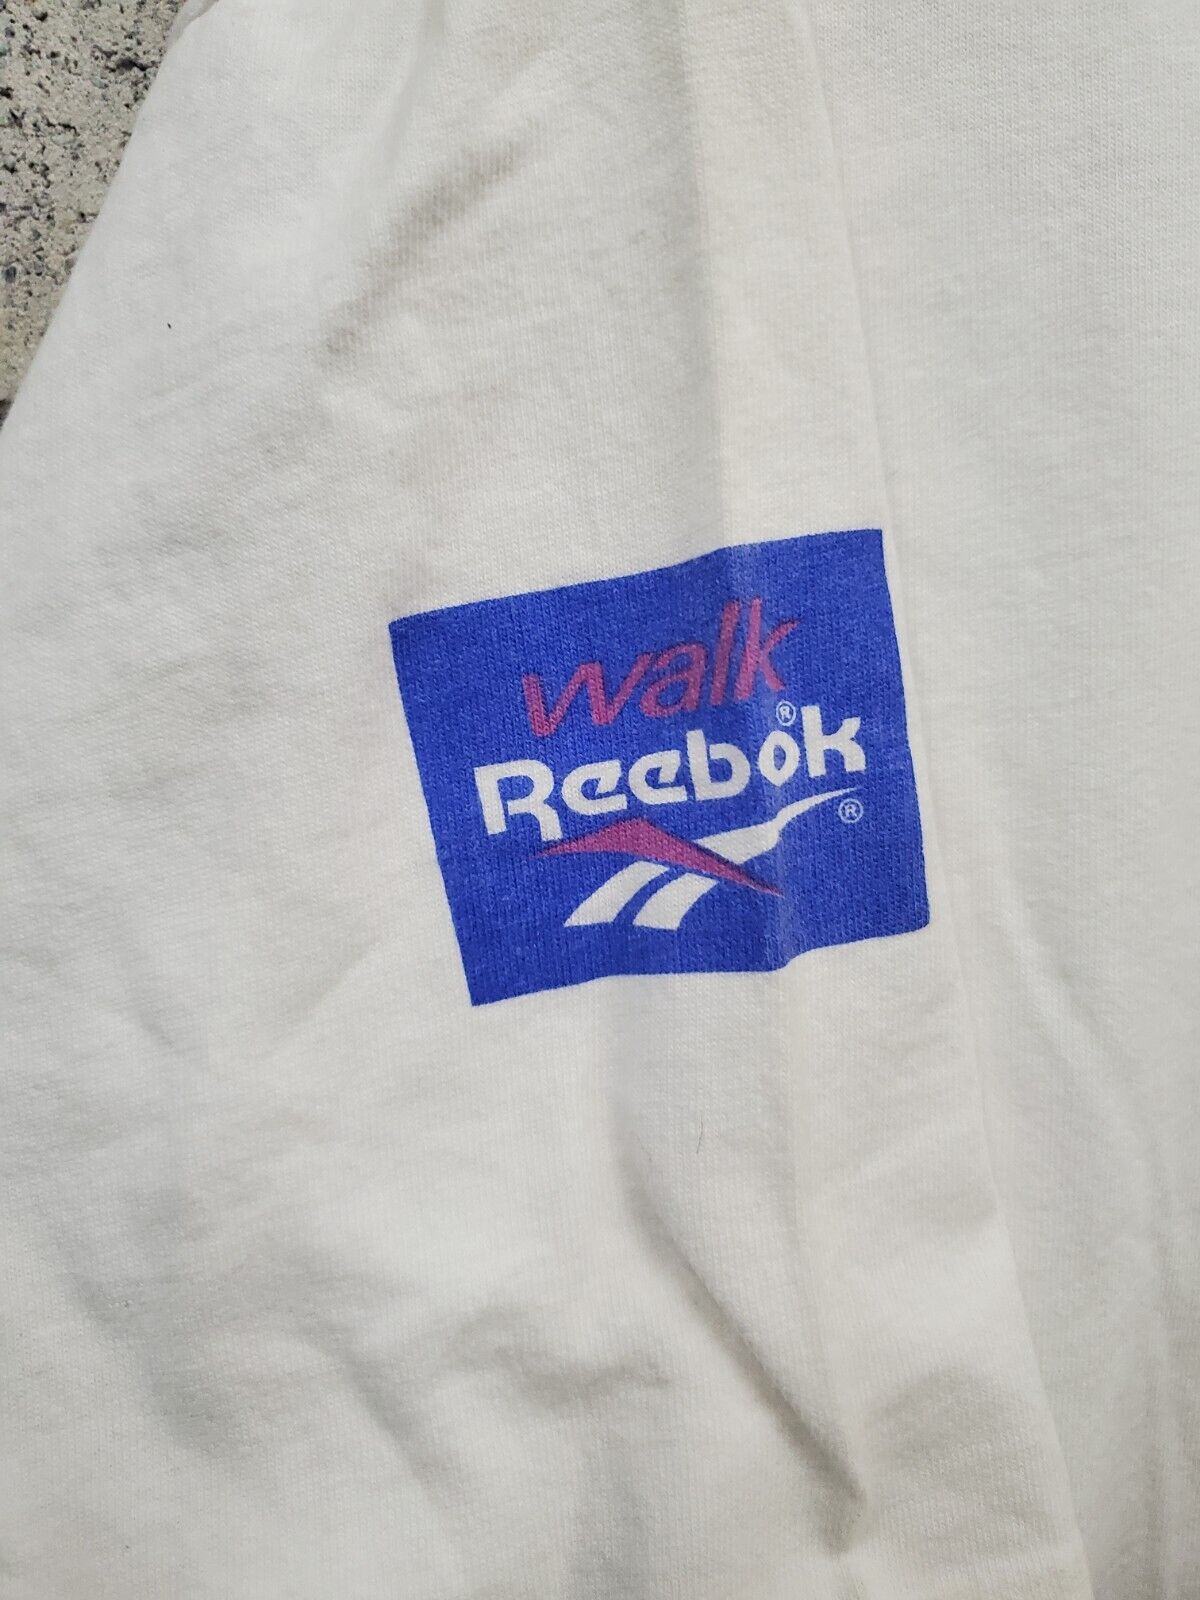 Mens Vintage Reebok T-Shirt Size Large